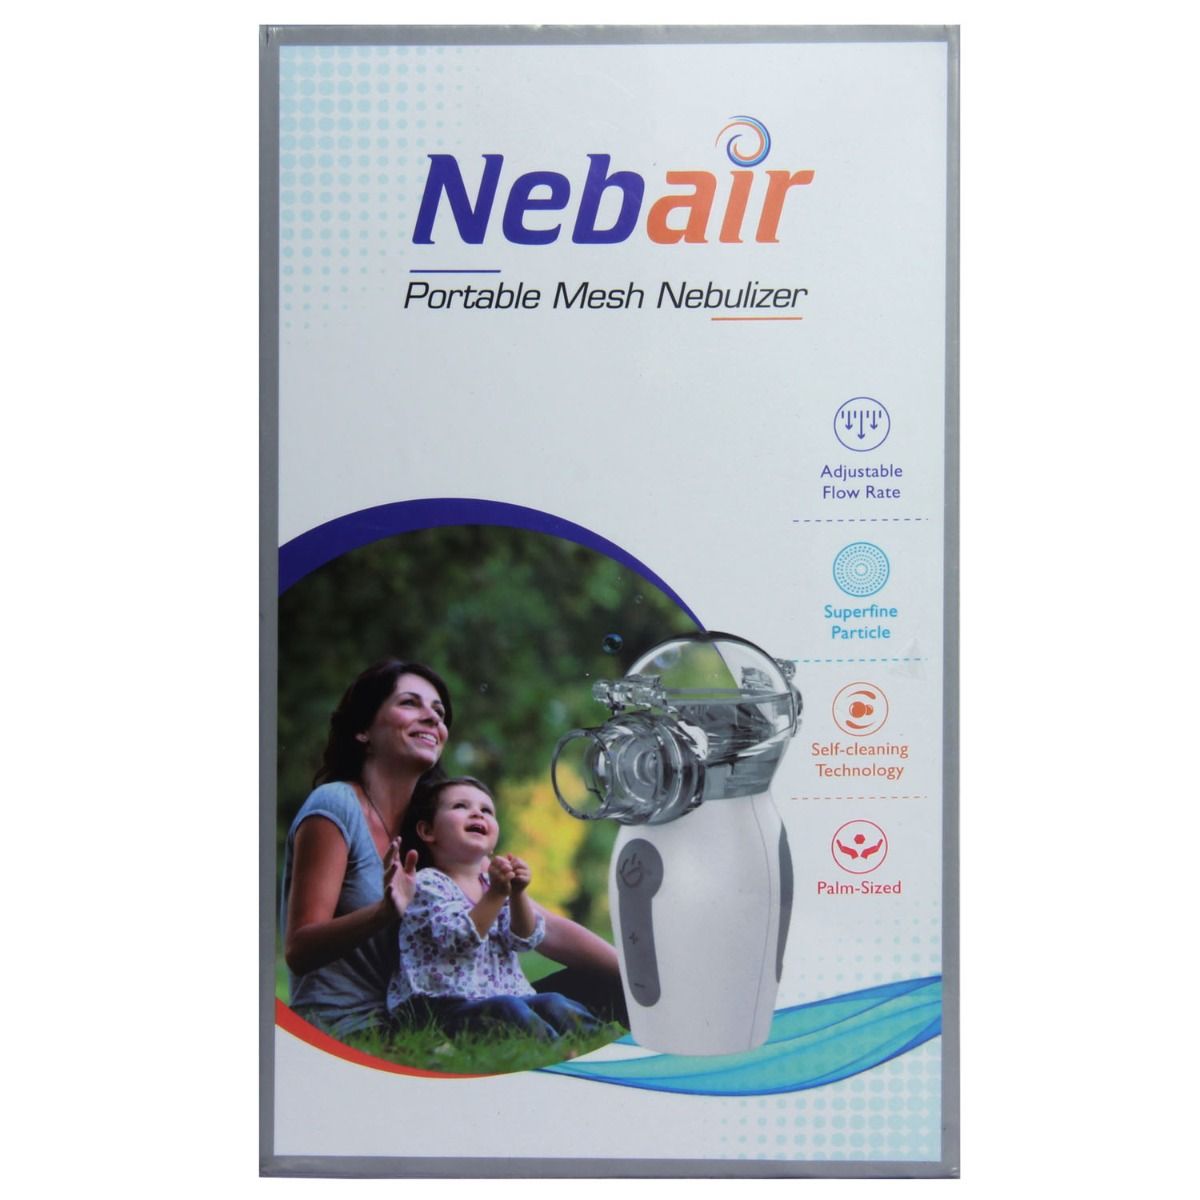 Nebair Portable Mesh Nebulizer (Zydus), Pack of 1 